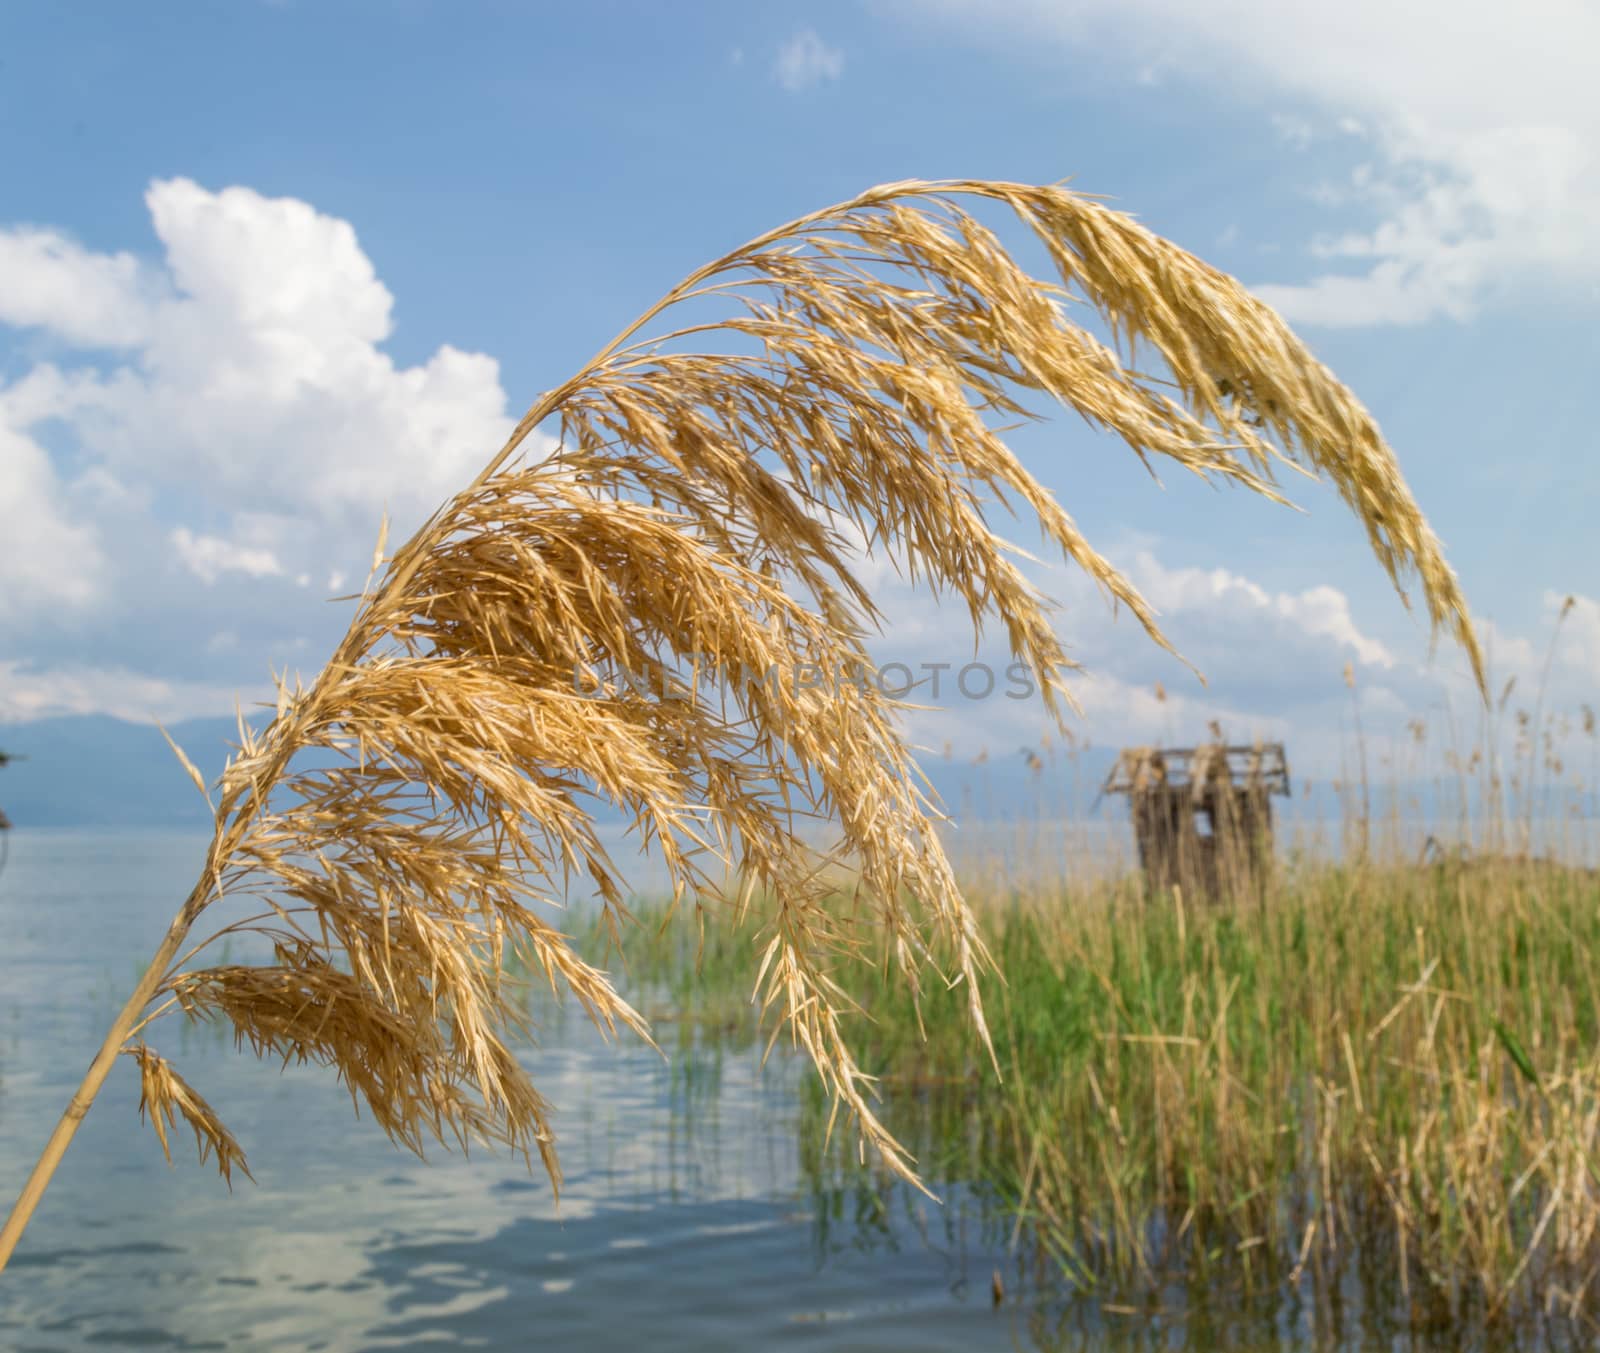 Reed in the lake by viktor.micevski@rocketmail.com